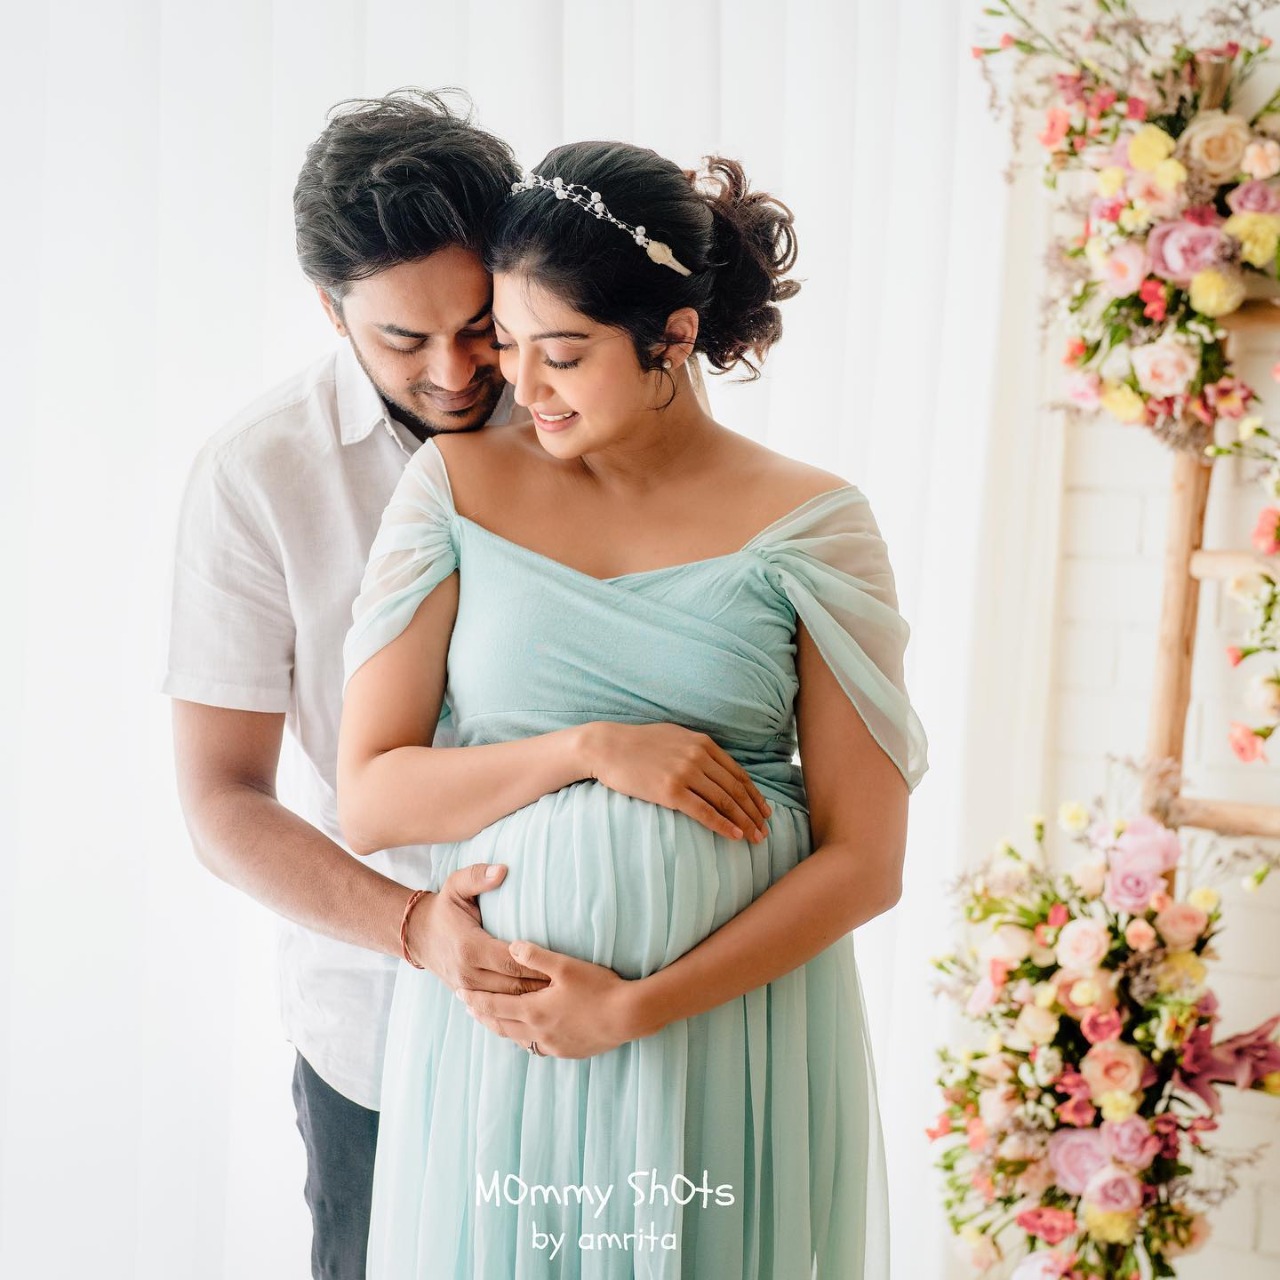 Pranitha Subhash Latest Pregnancy Photo shoot went viral on social media